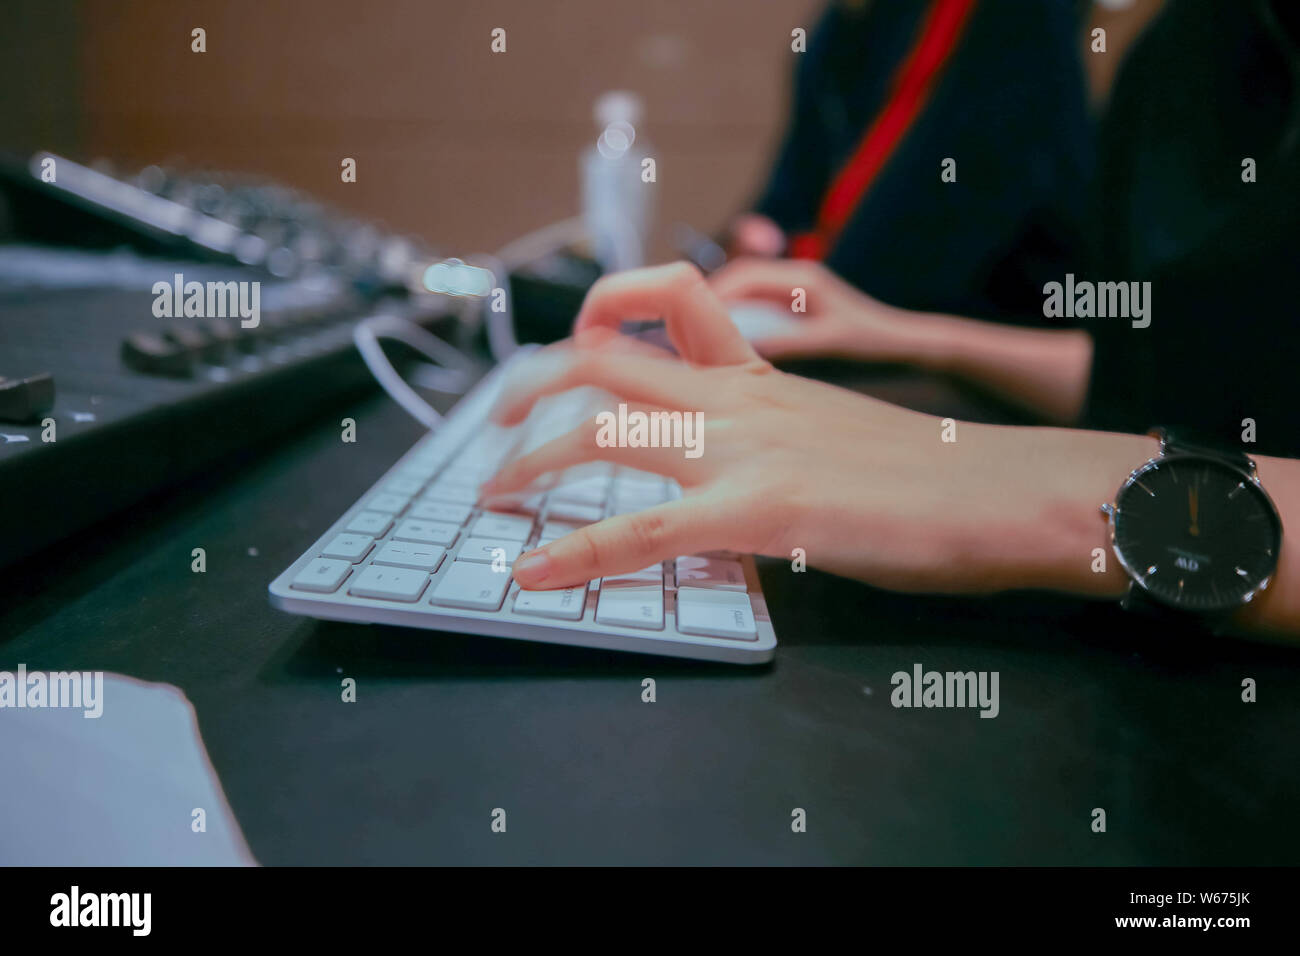 Post-90 s Chinesische Sound Mixer Mengmeng betreibt die Tonaufnahme equipment einen Song in einem Studio in Peking, China, 11. April 2018. Mengmeng Stockfoto